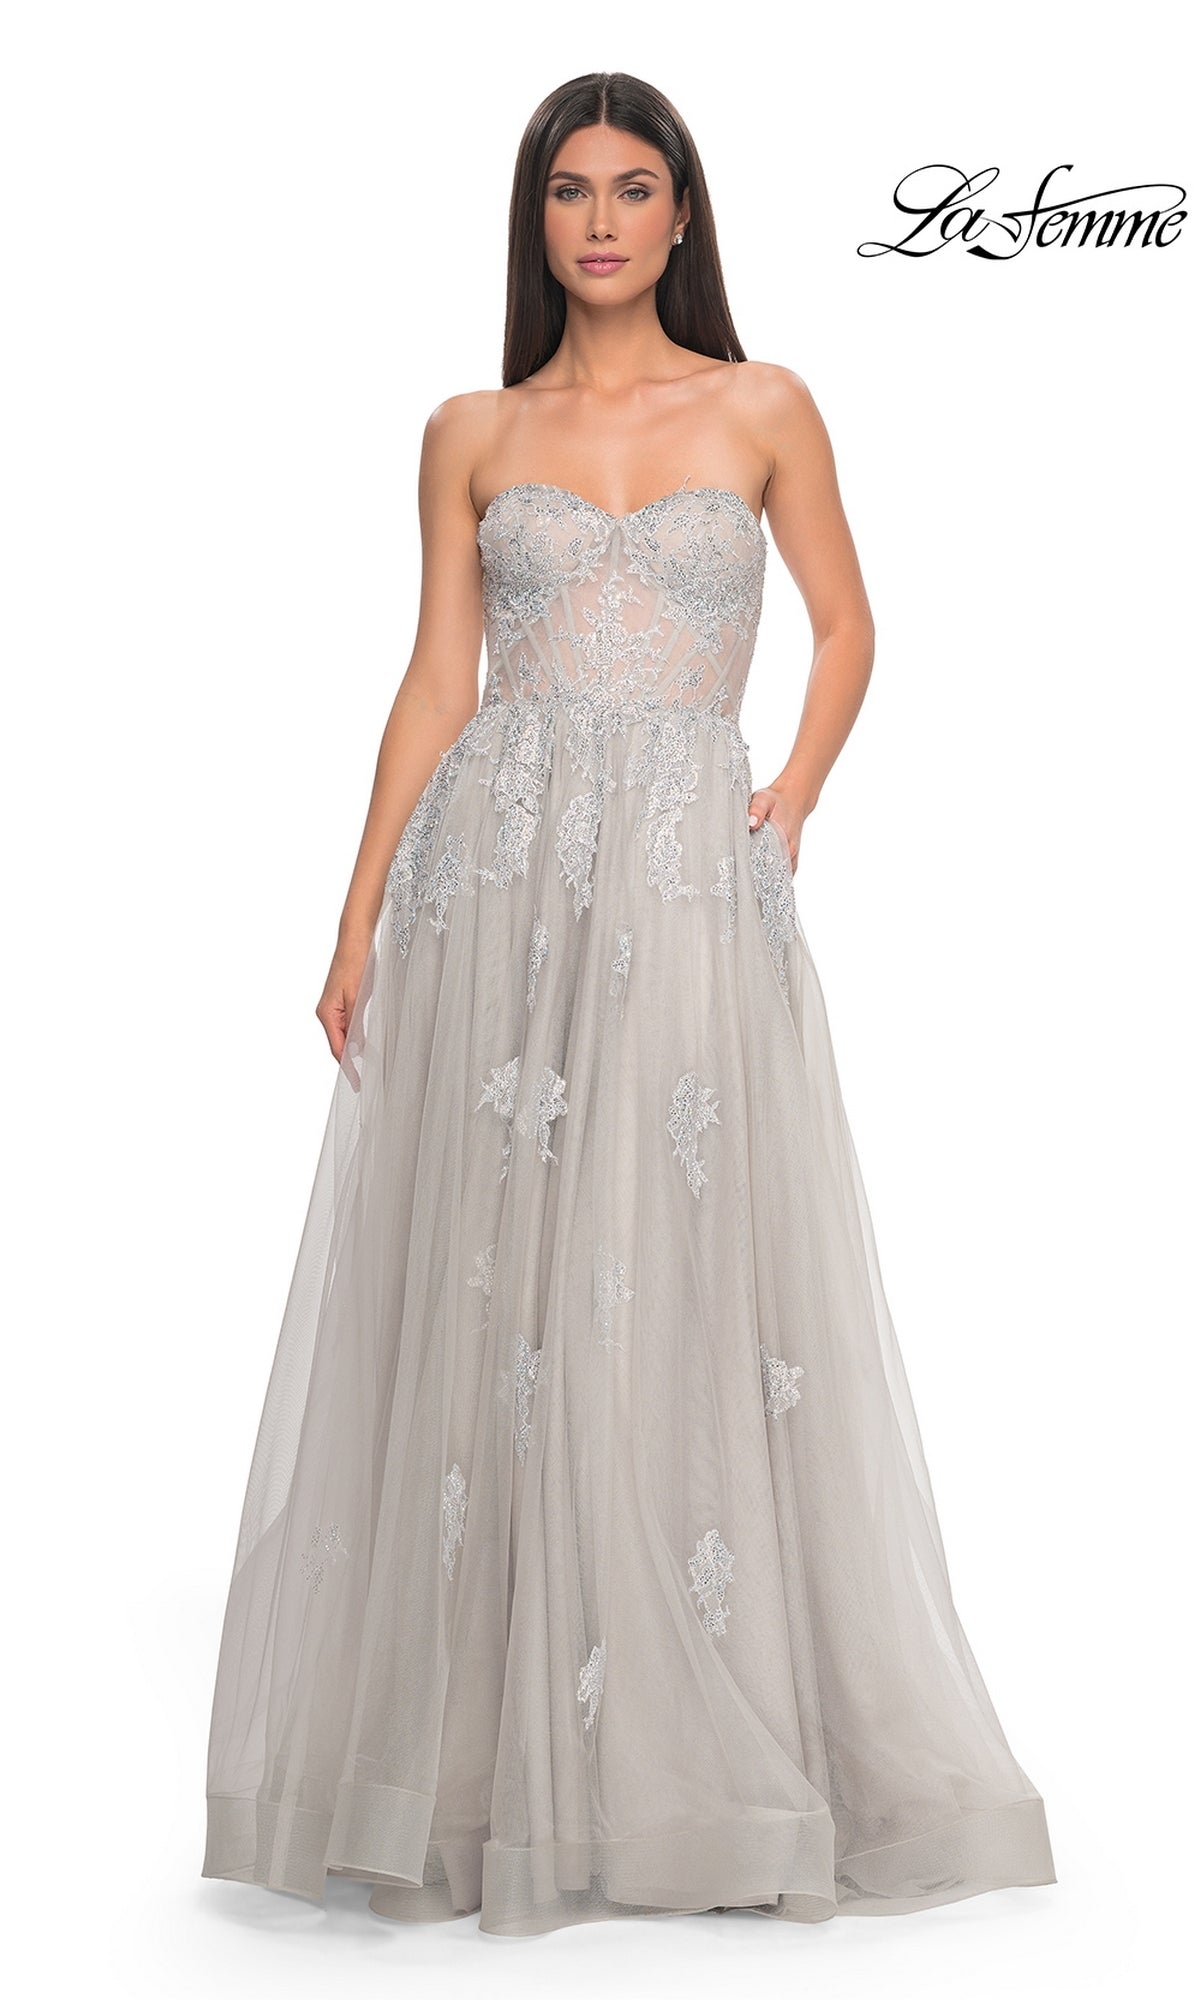  La Femme 32111 Formal Prom Dress